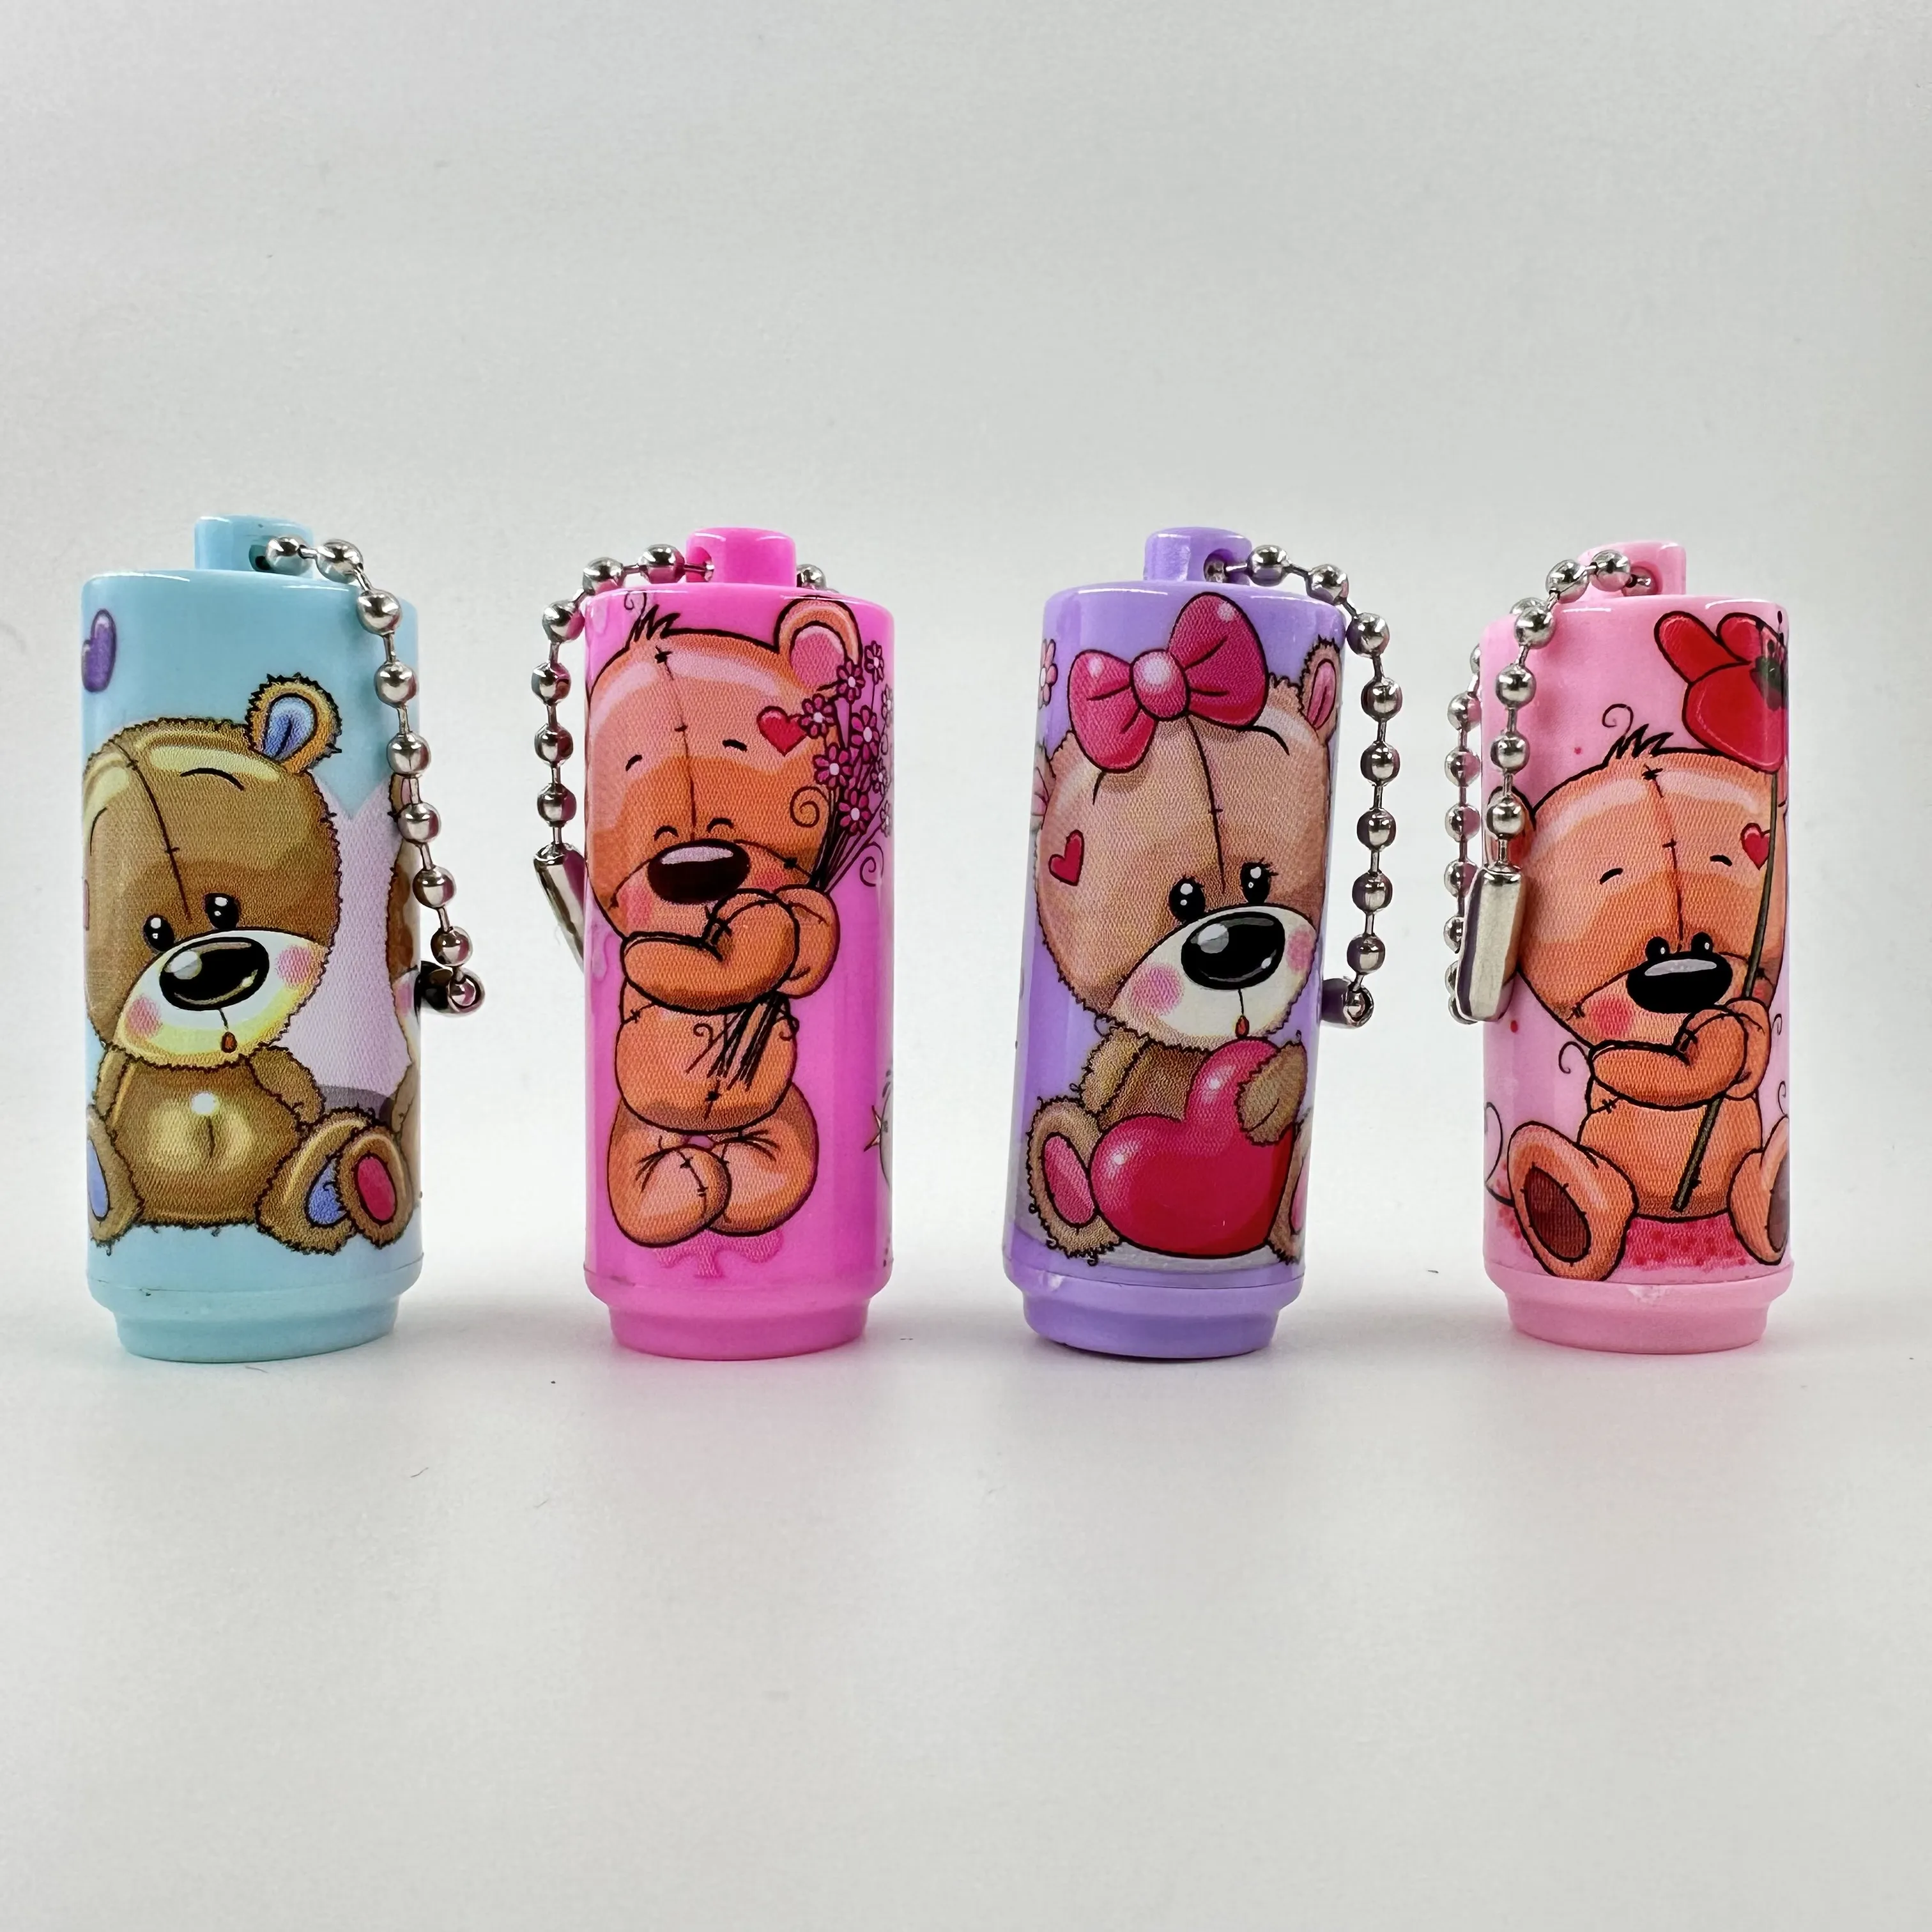 Jumlah pesanan Minimum desain beruang kecil lucu multifungsi mainan anak gantungan kunci Led